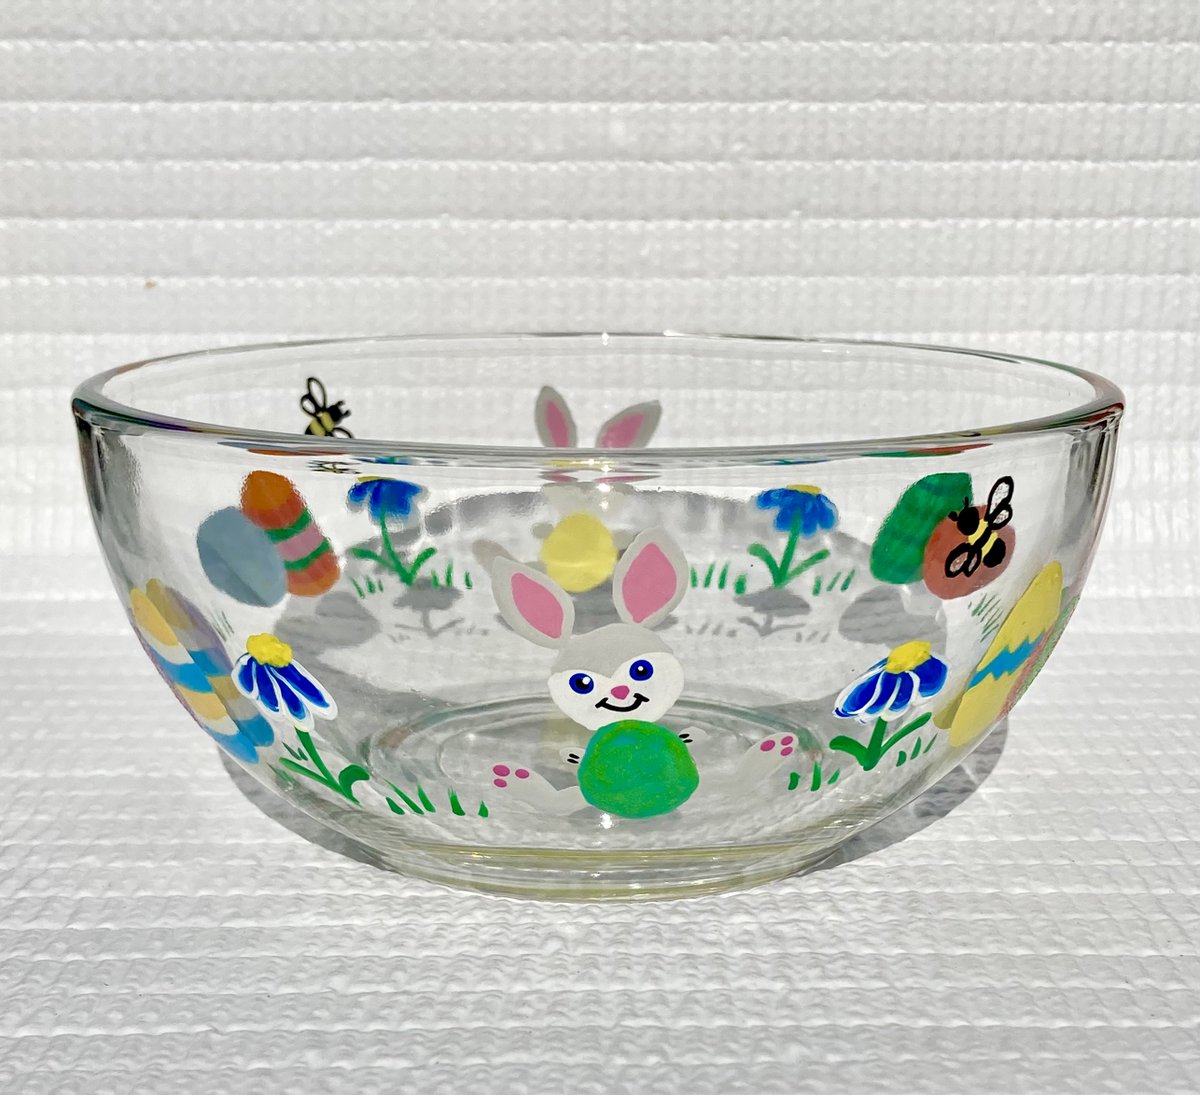 Easter candy bowl etsy.com/listing/166254… #easterbowl #candybowl #eastereggs #SMILEtt23 #easterdecor #eastergift #CraftBizParty #etsy #etsyshop